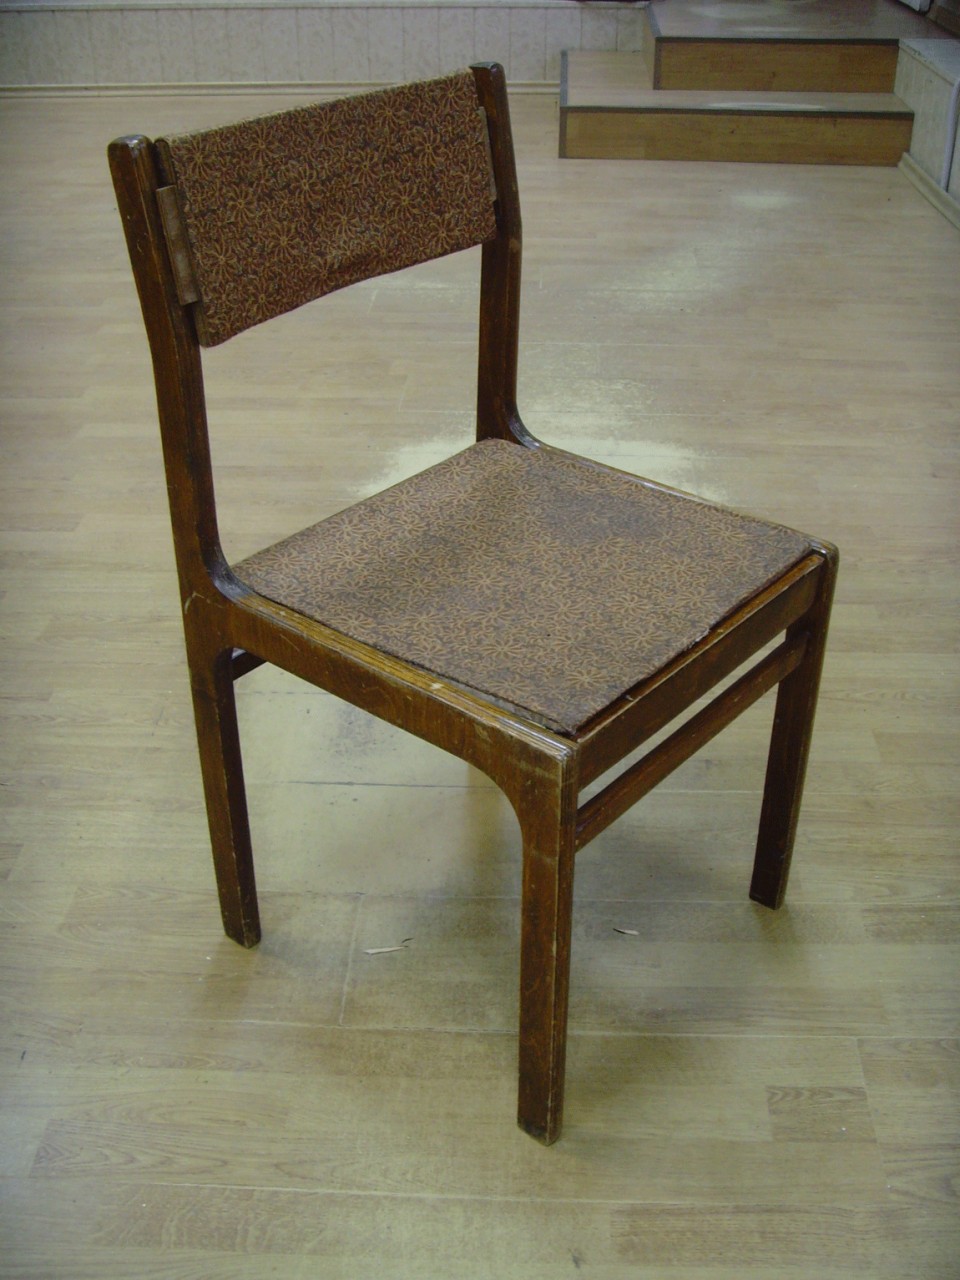 фото деревянного стула со спинкой